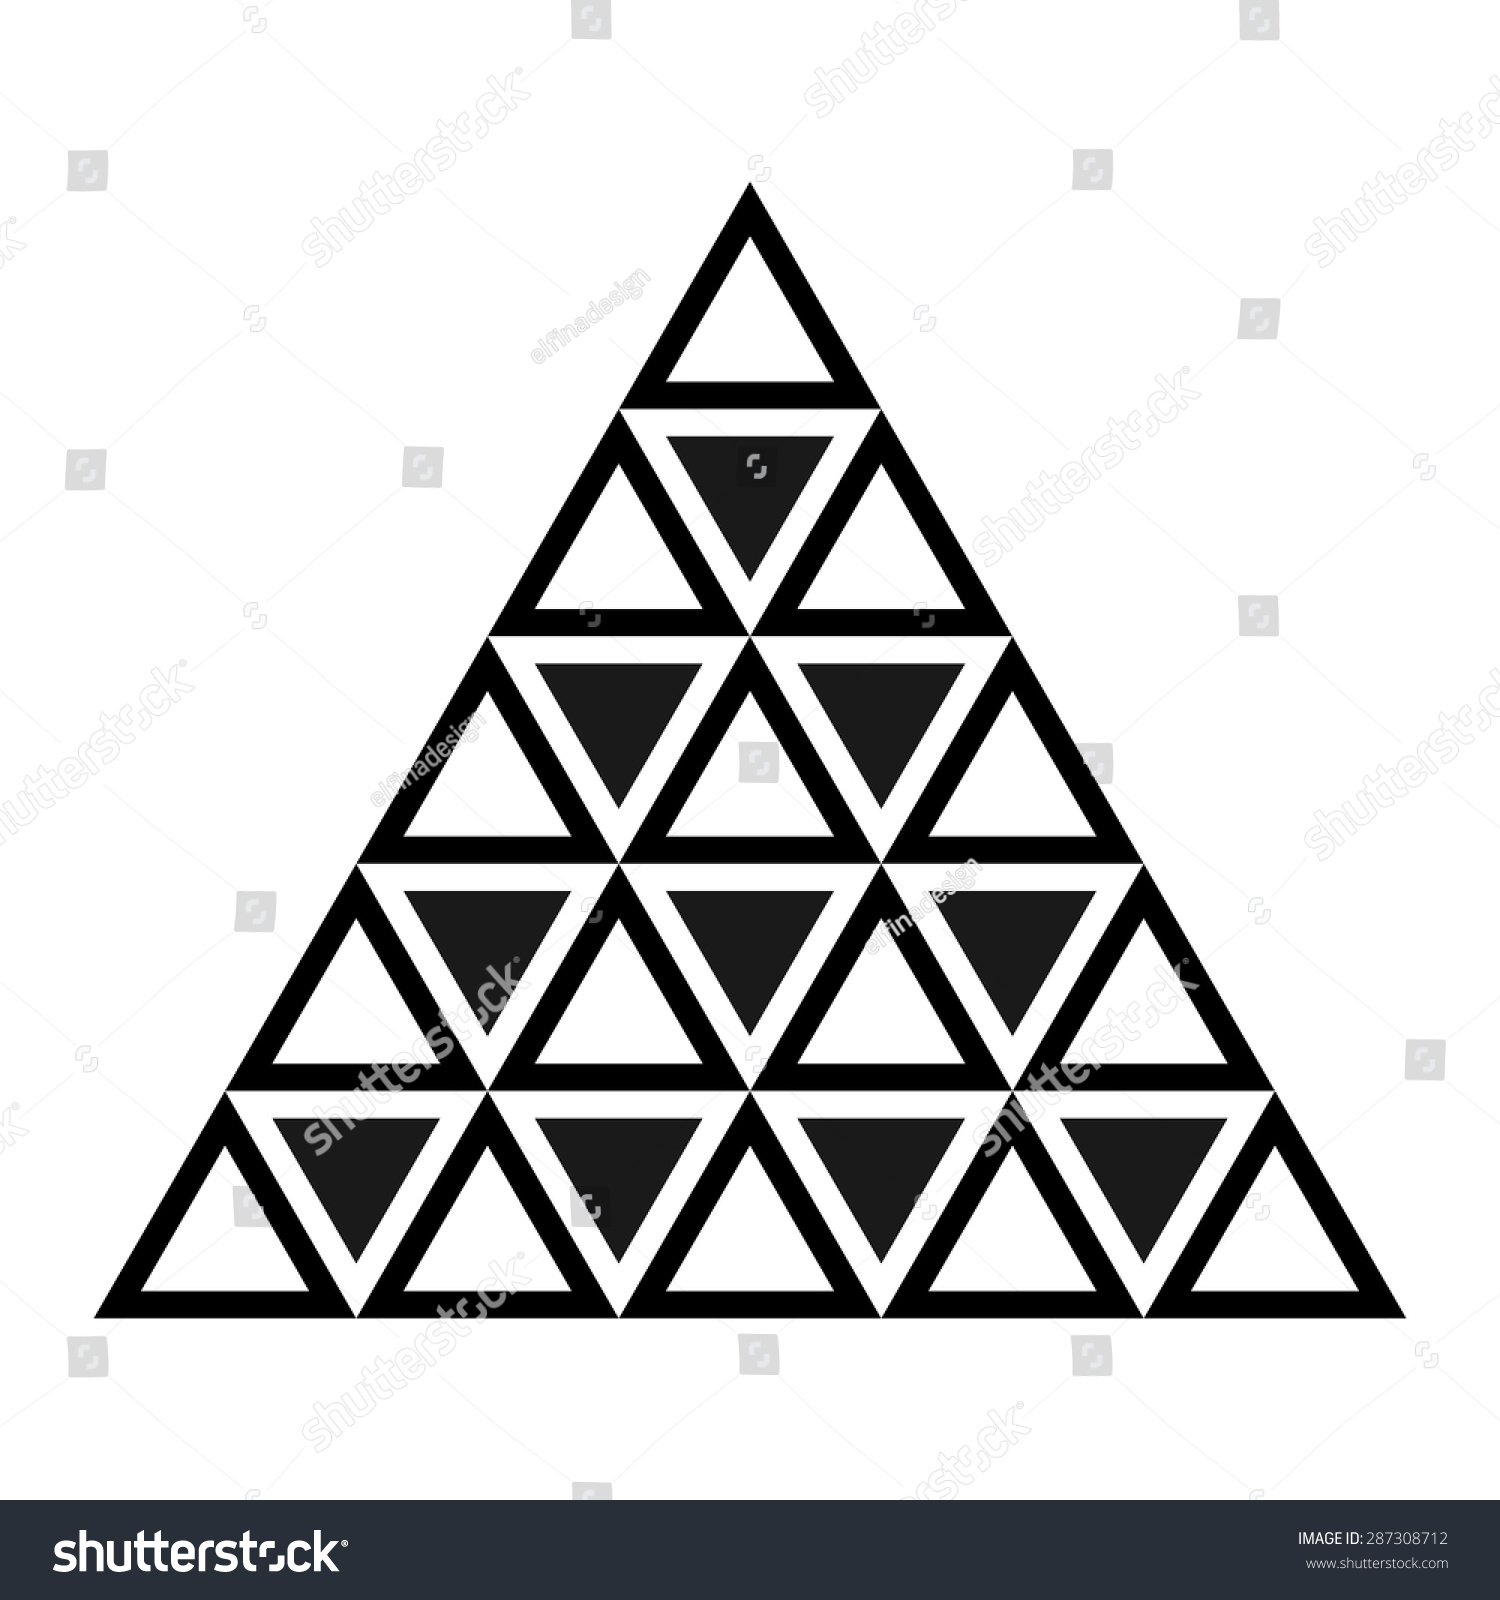 Triangles Pyramid Vector Geometric Design Triangle Stock Vector ...